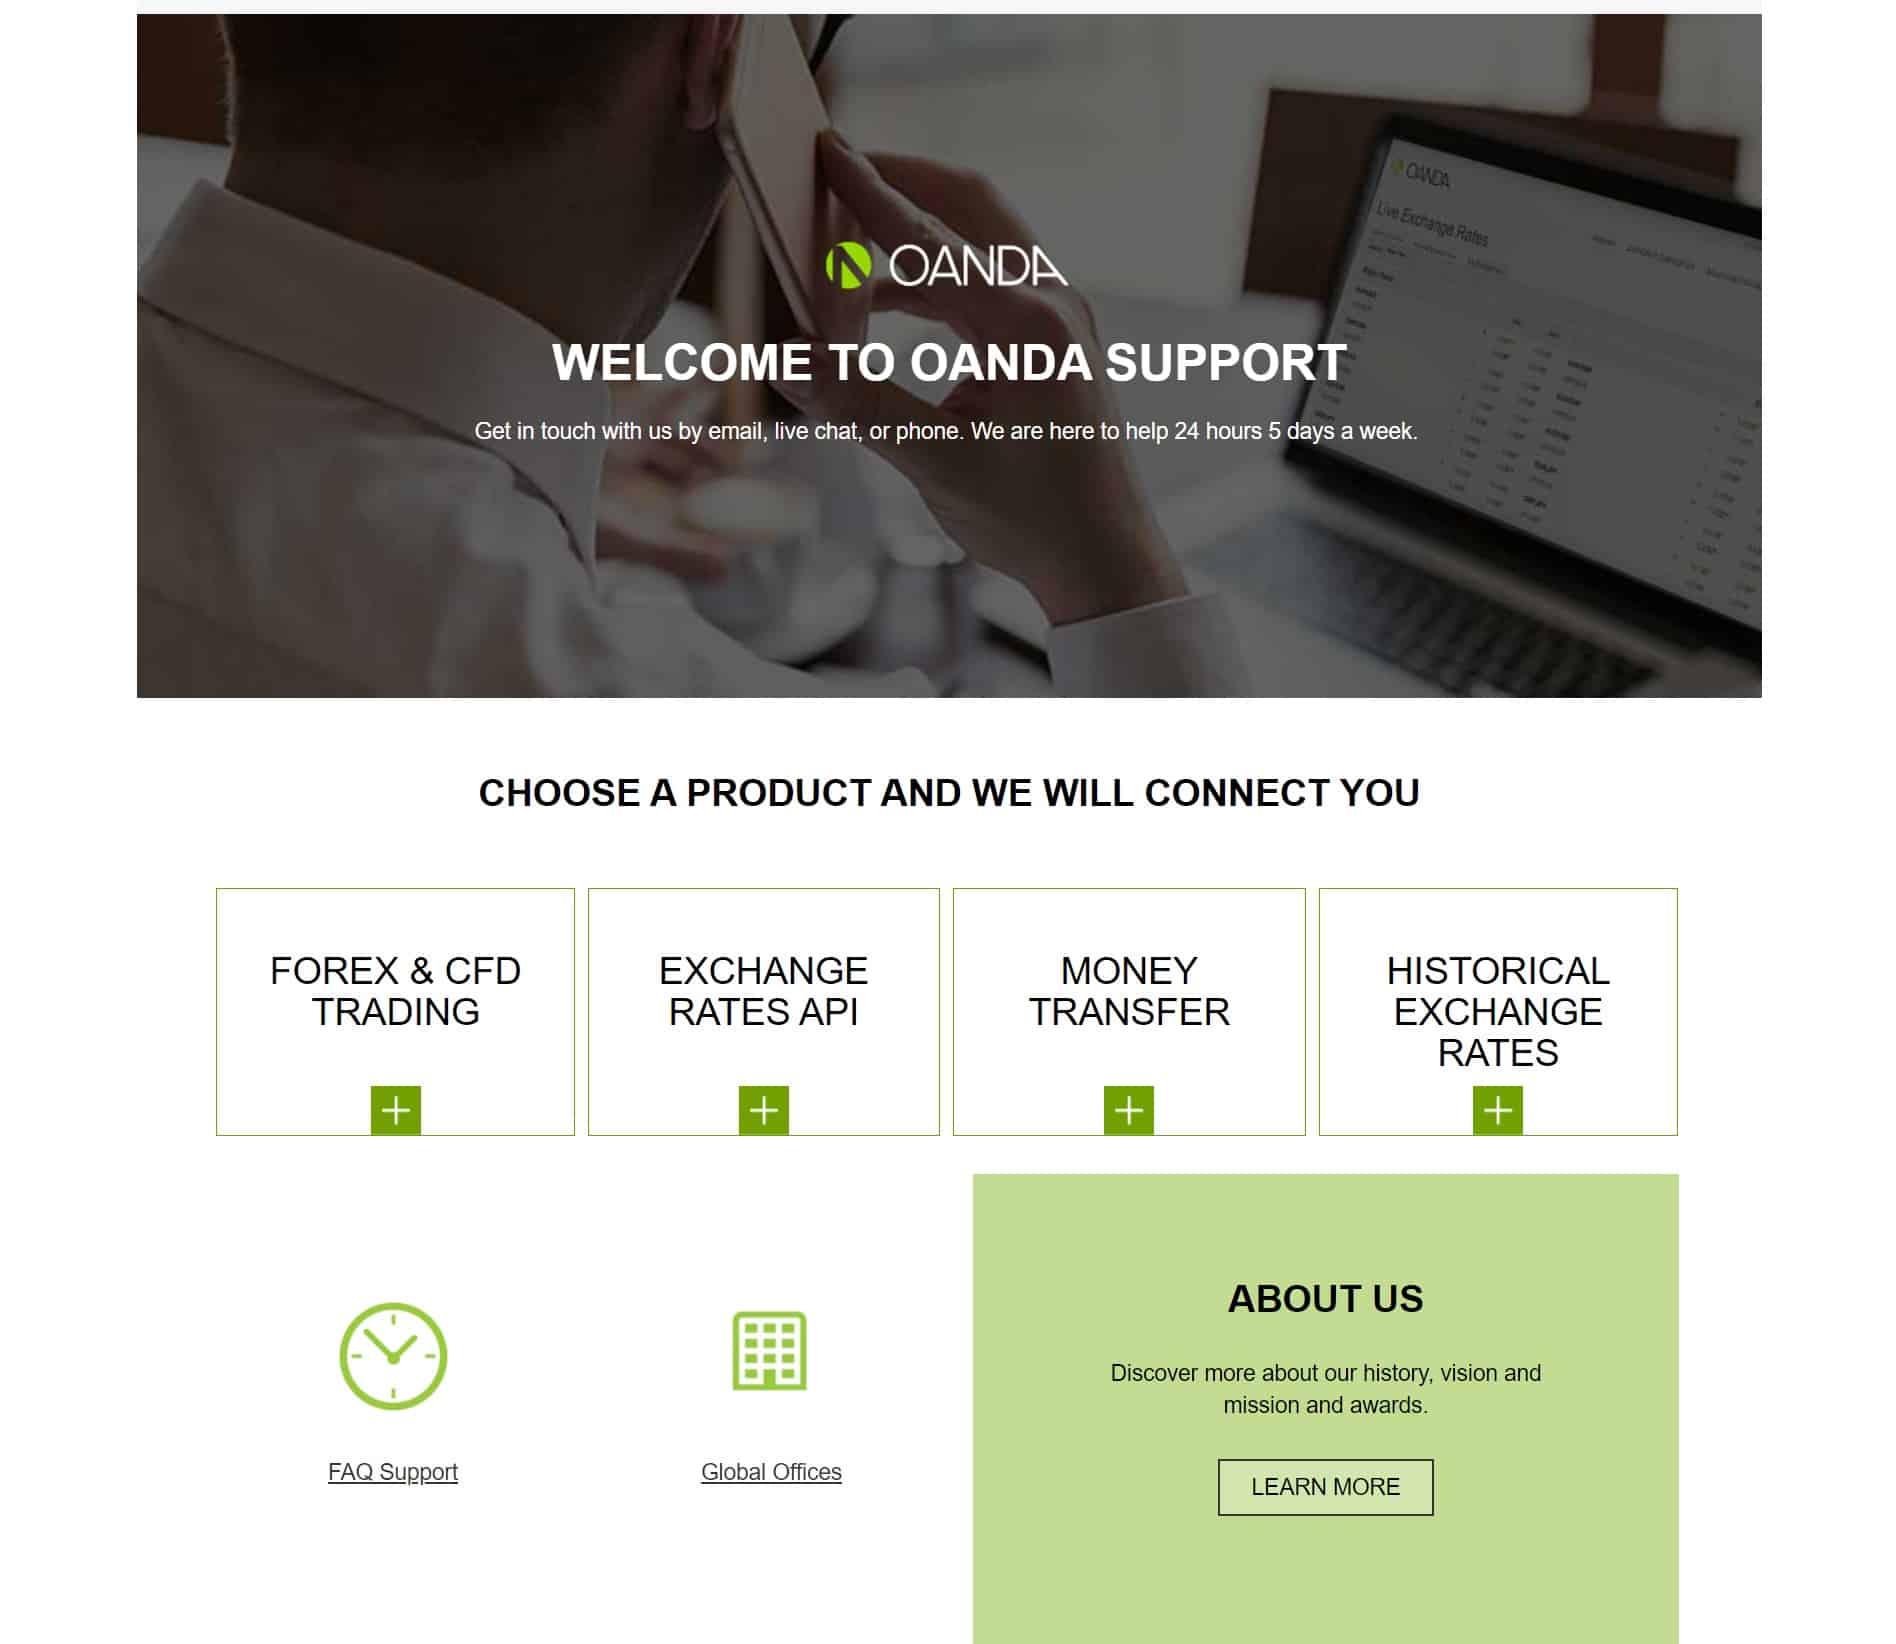 Oanda customer support